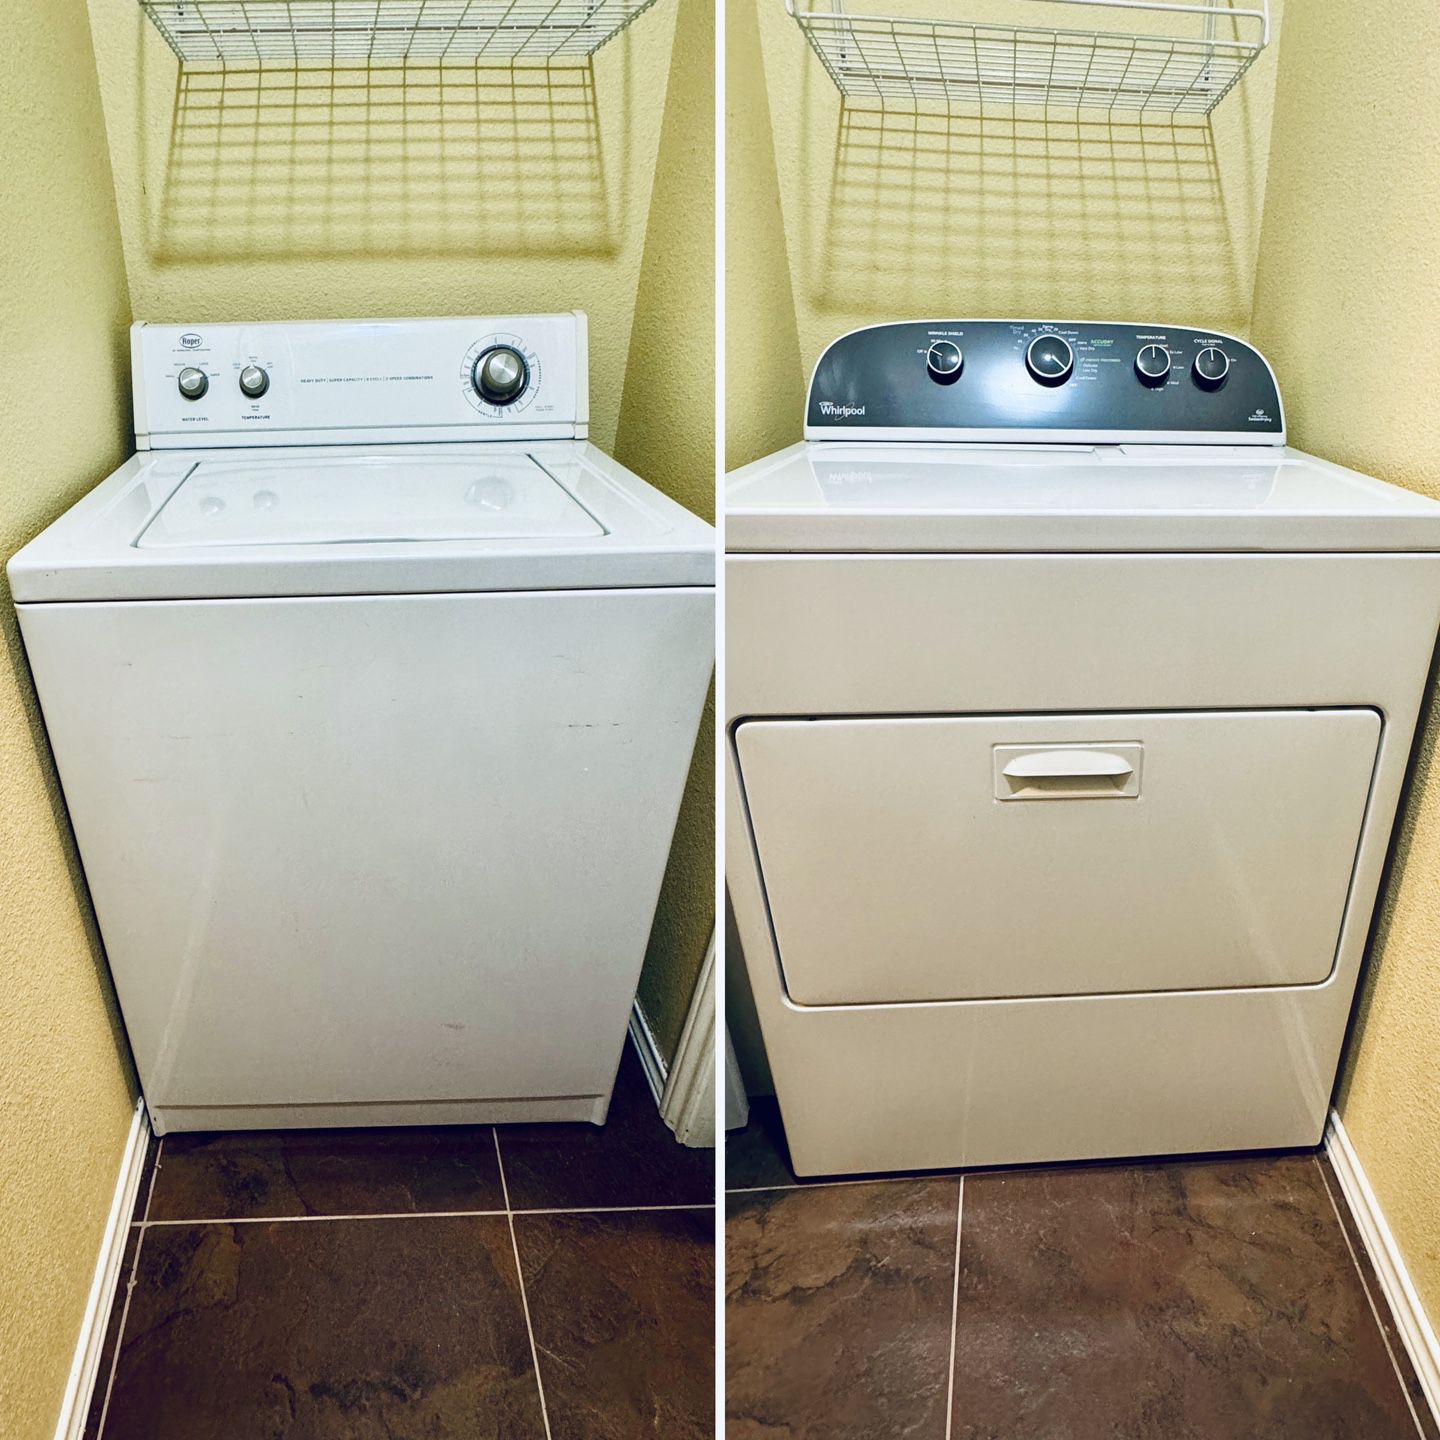 MUST GO: Washer / Dryer Set - MAKE AN OFFER!